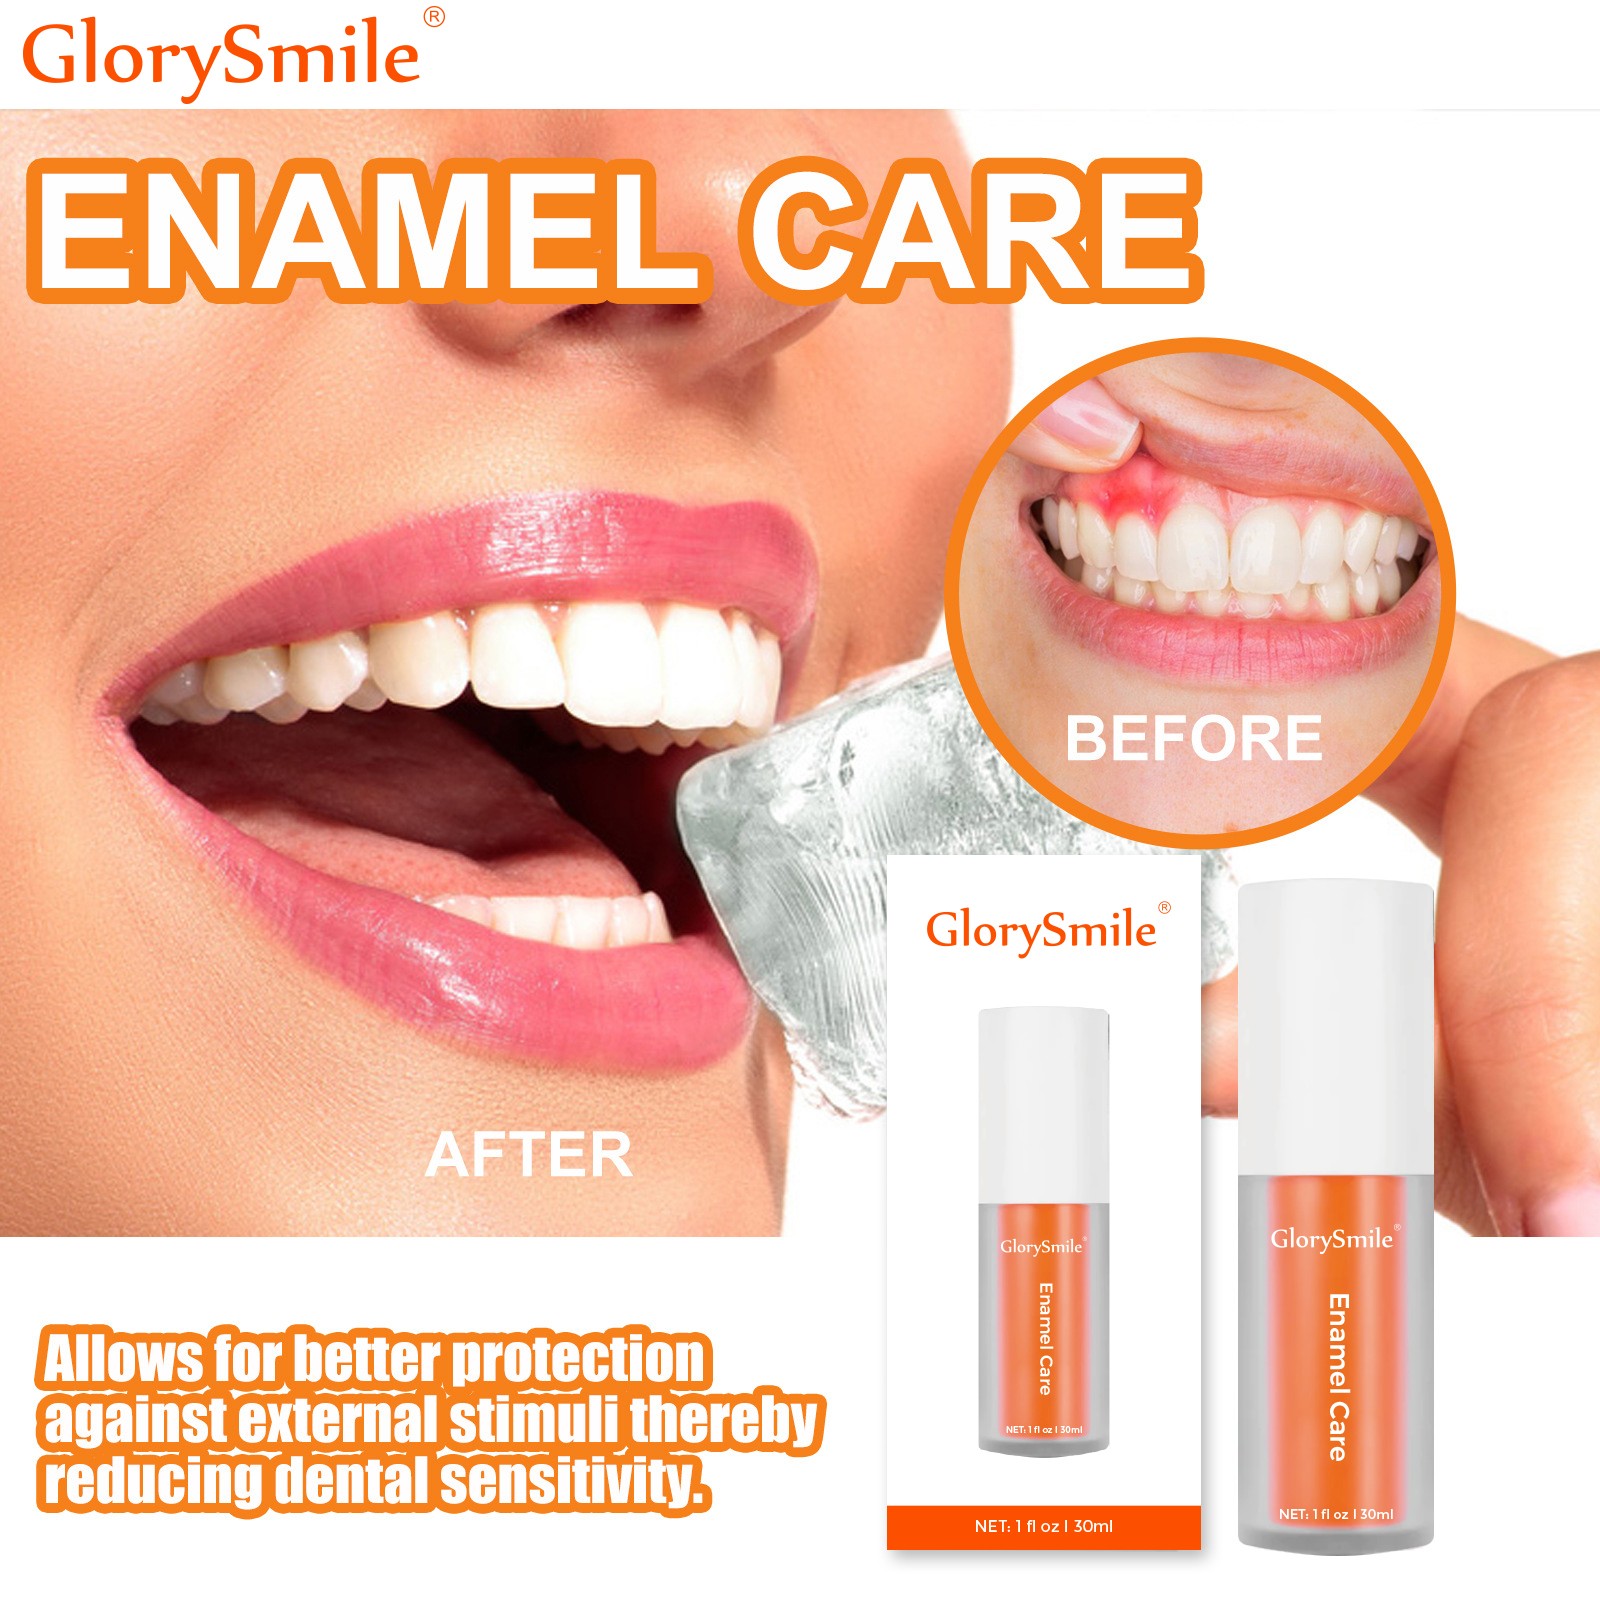 GlorySmile charcoal bristle toothbrush customized for whitening teeth-1